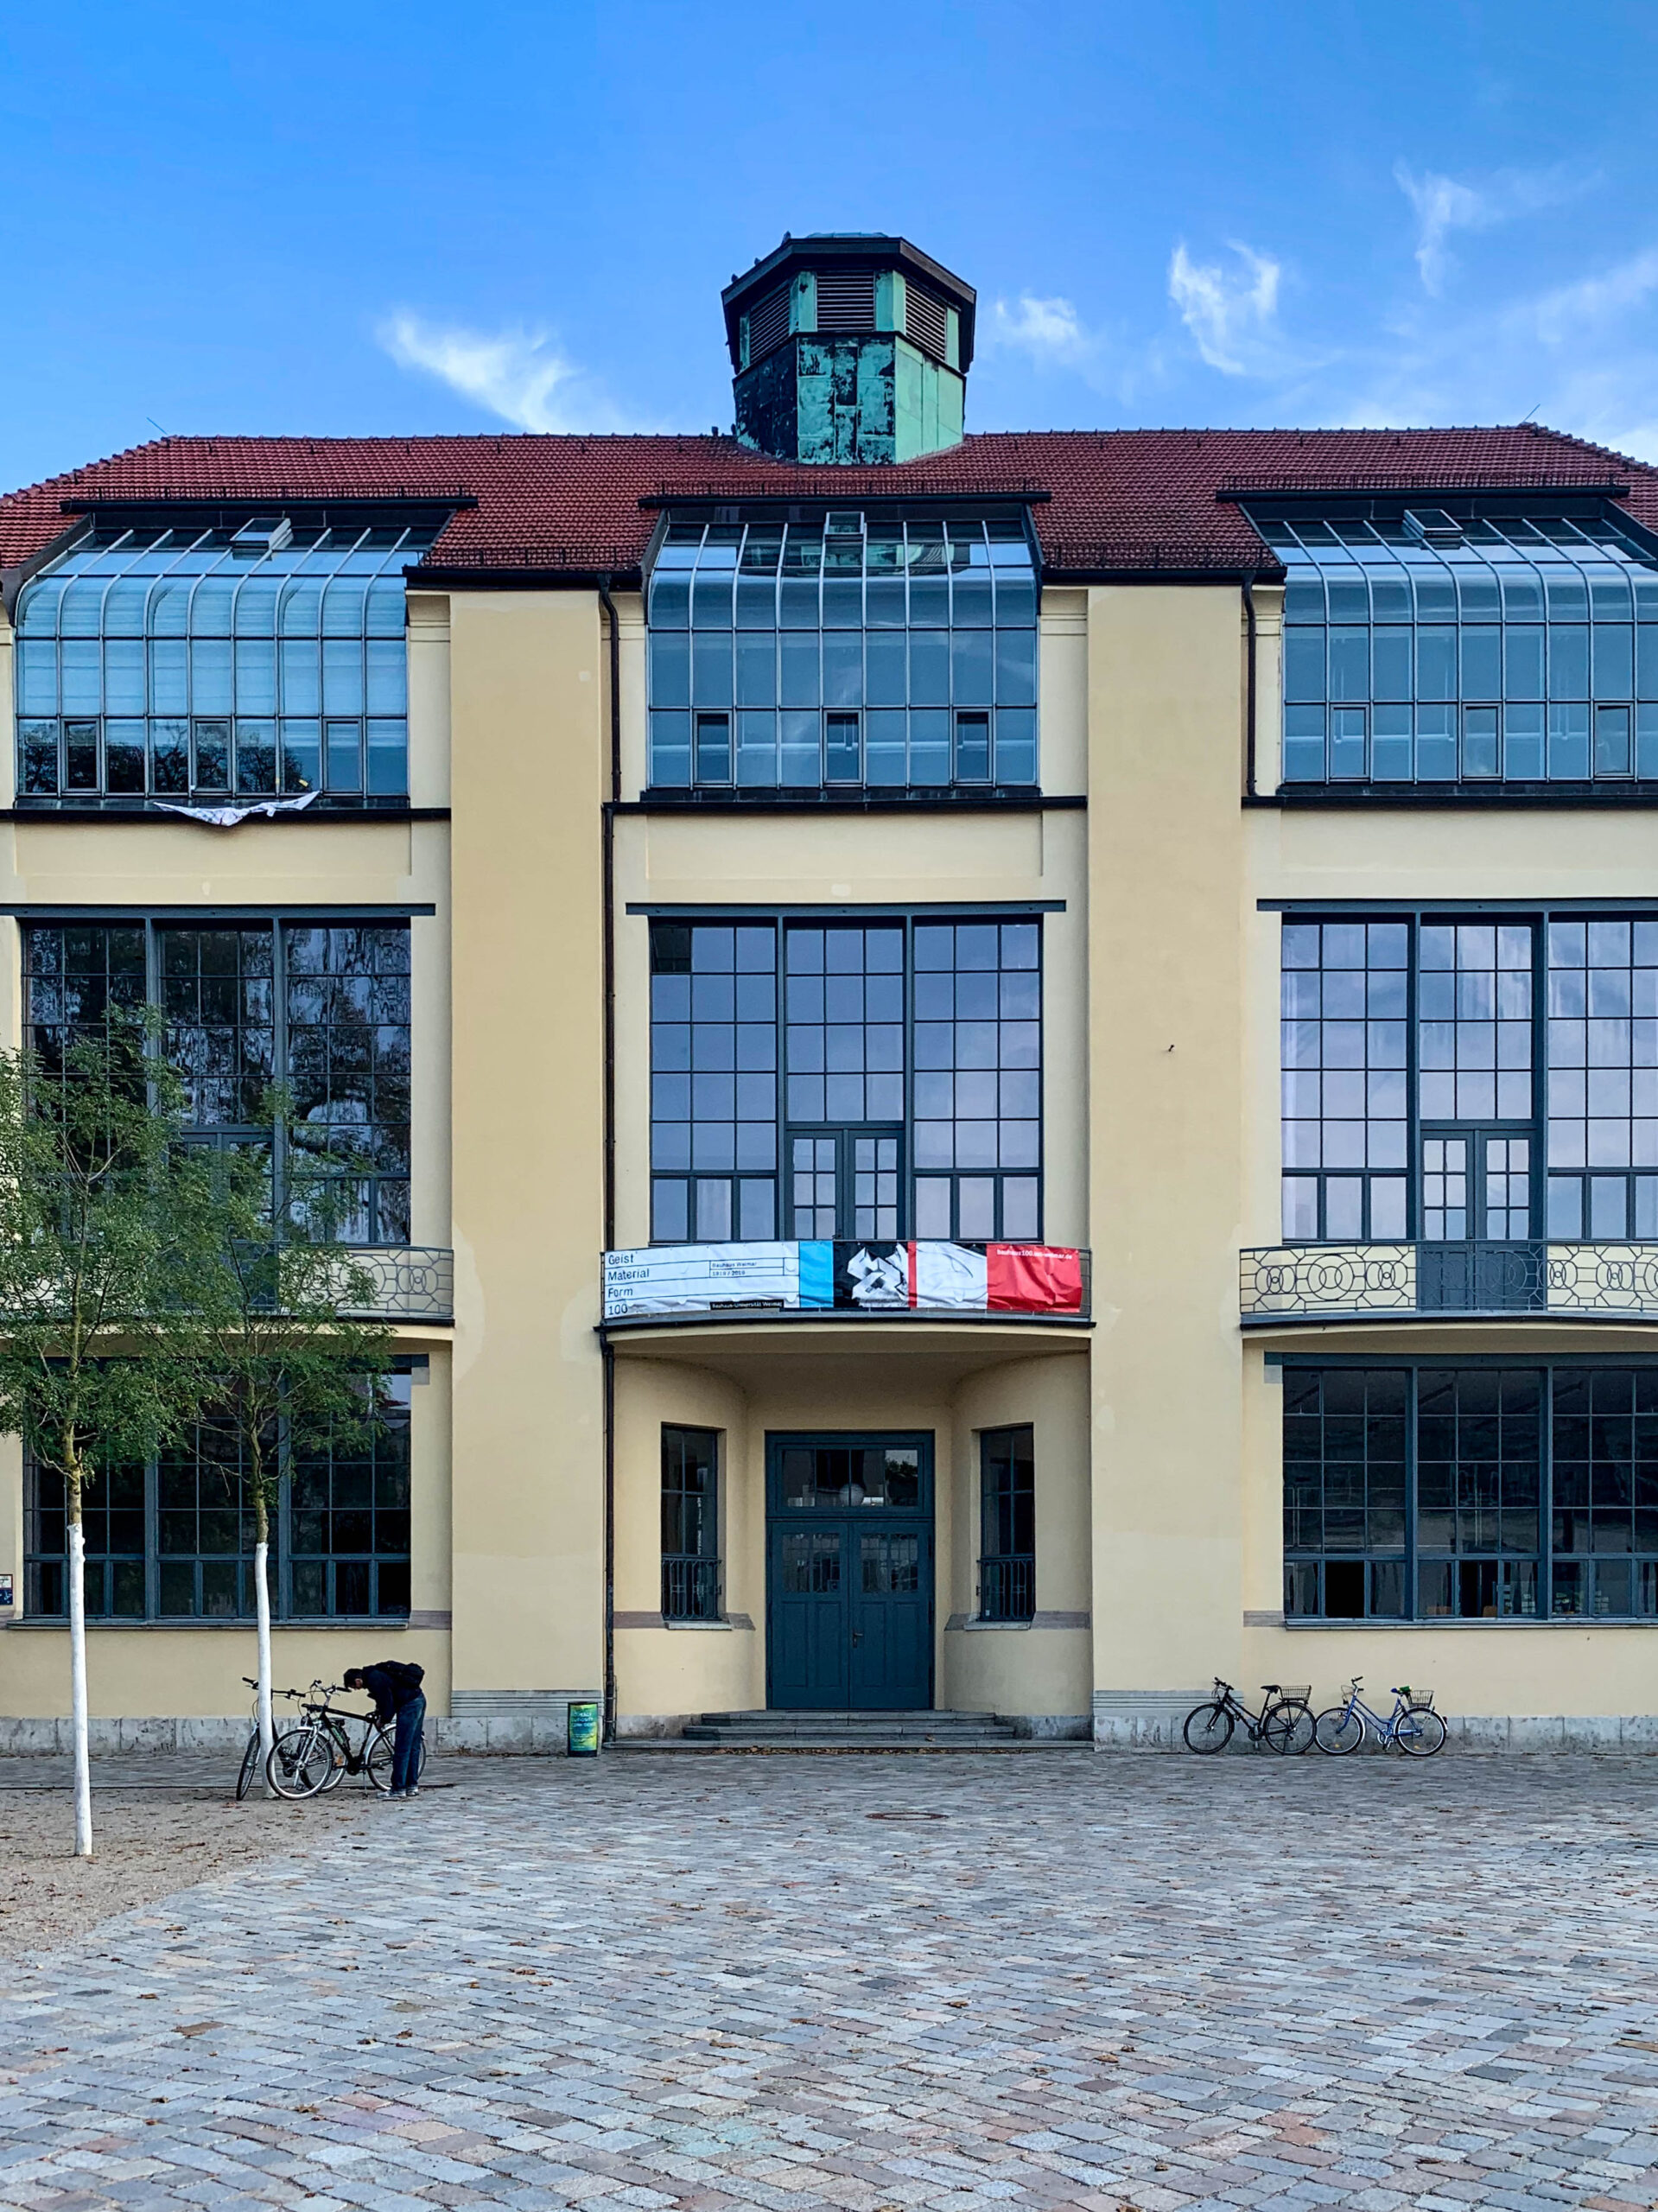 Bauhaus University, 1904-1911. Architect: Henry van de Velde. Photo: Daniela Christmann